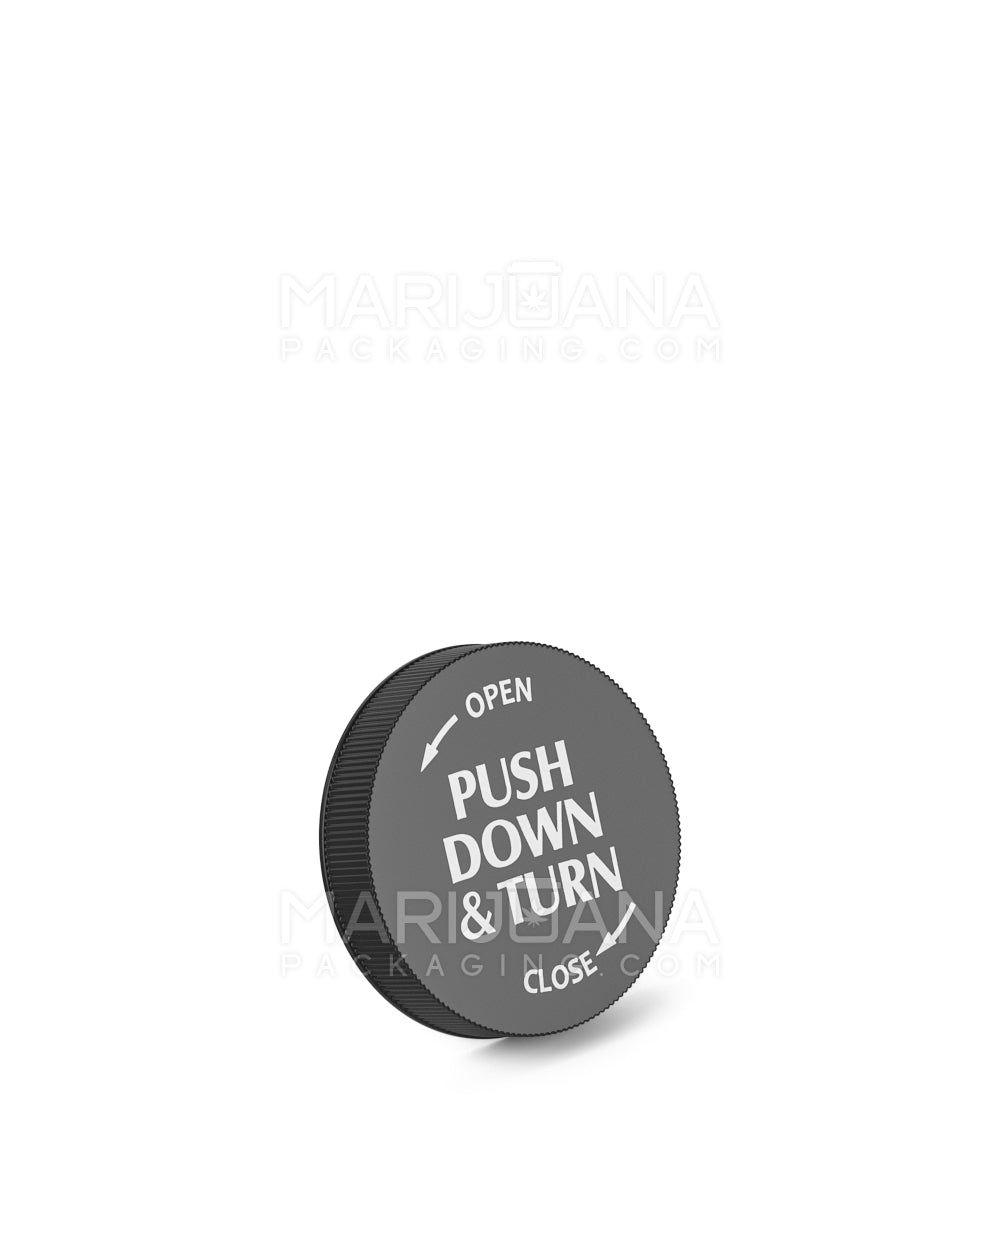 Child Resistant Opaque Black Push Down & Turn Cap Vial | 20dr - 3.5g | Sample - 10